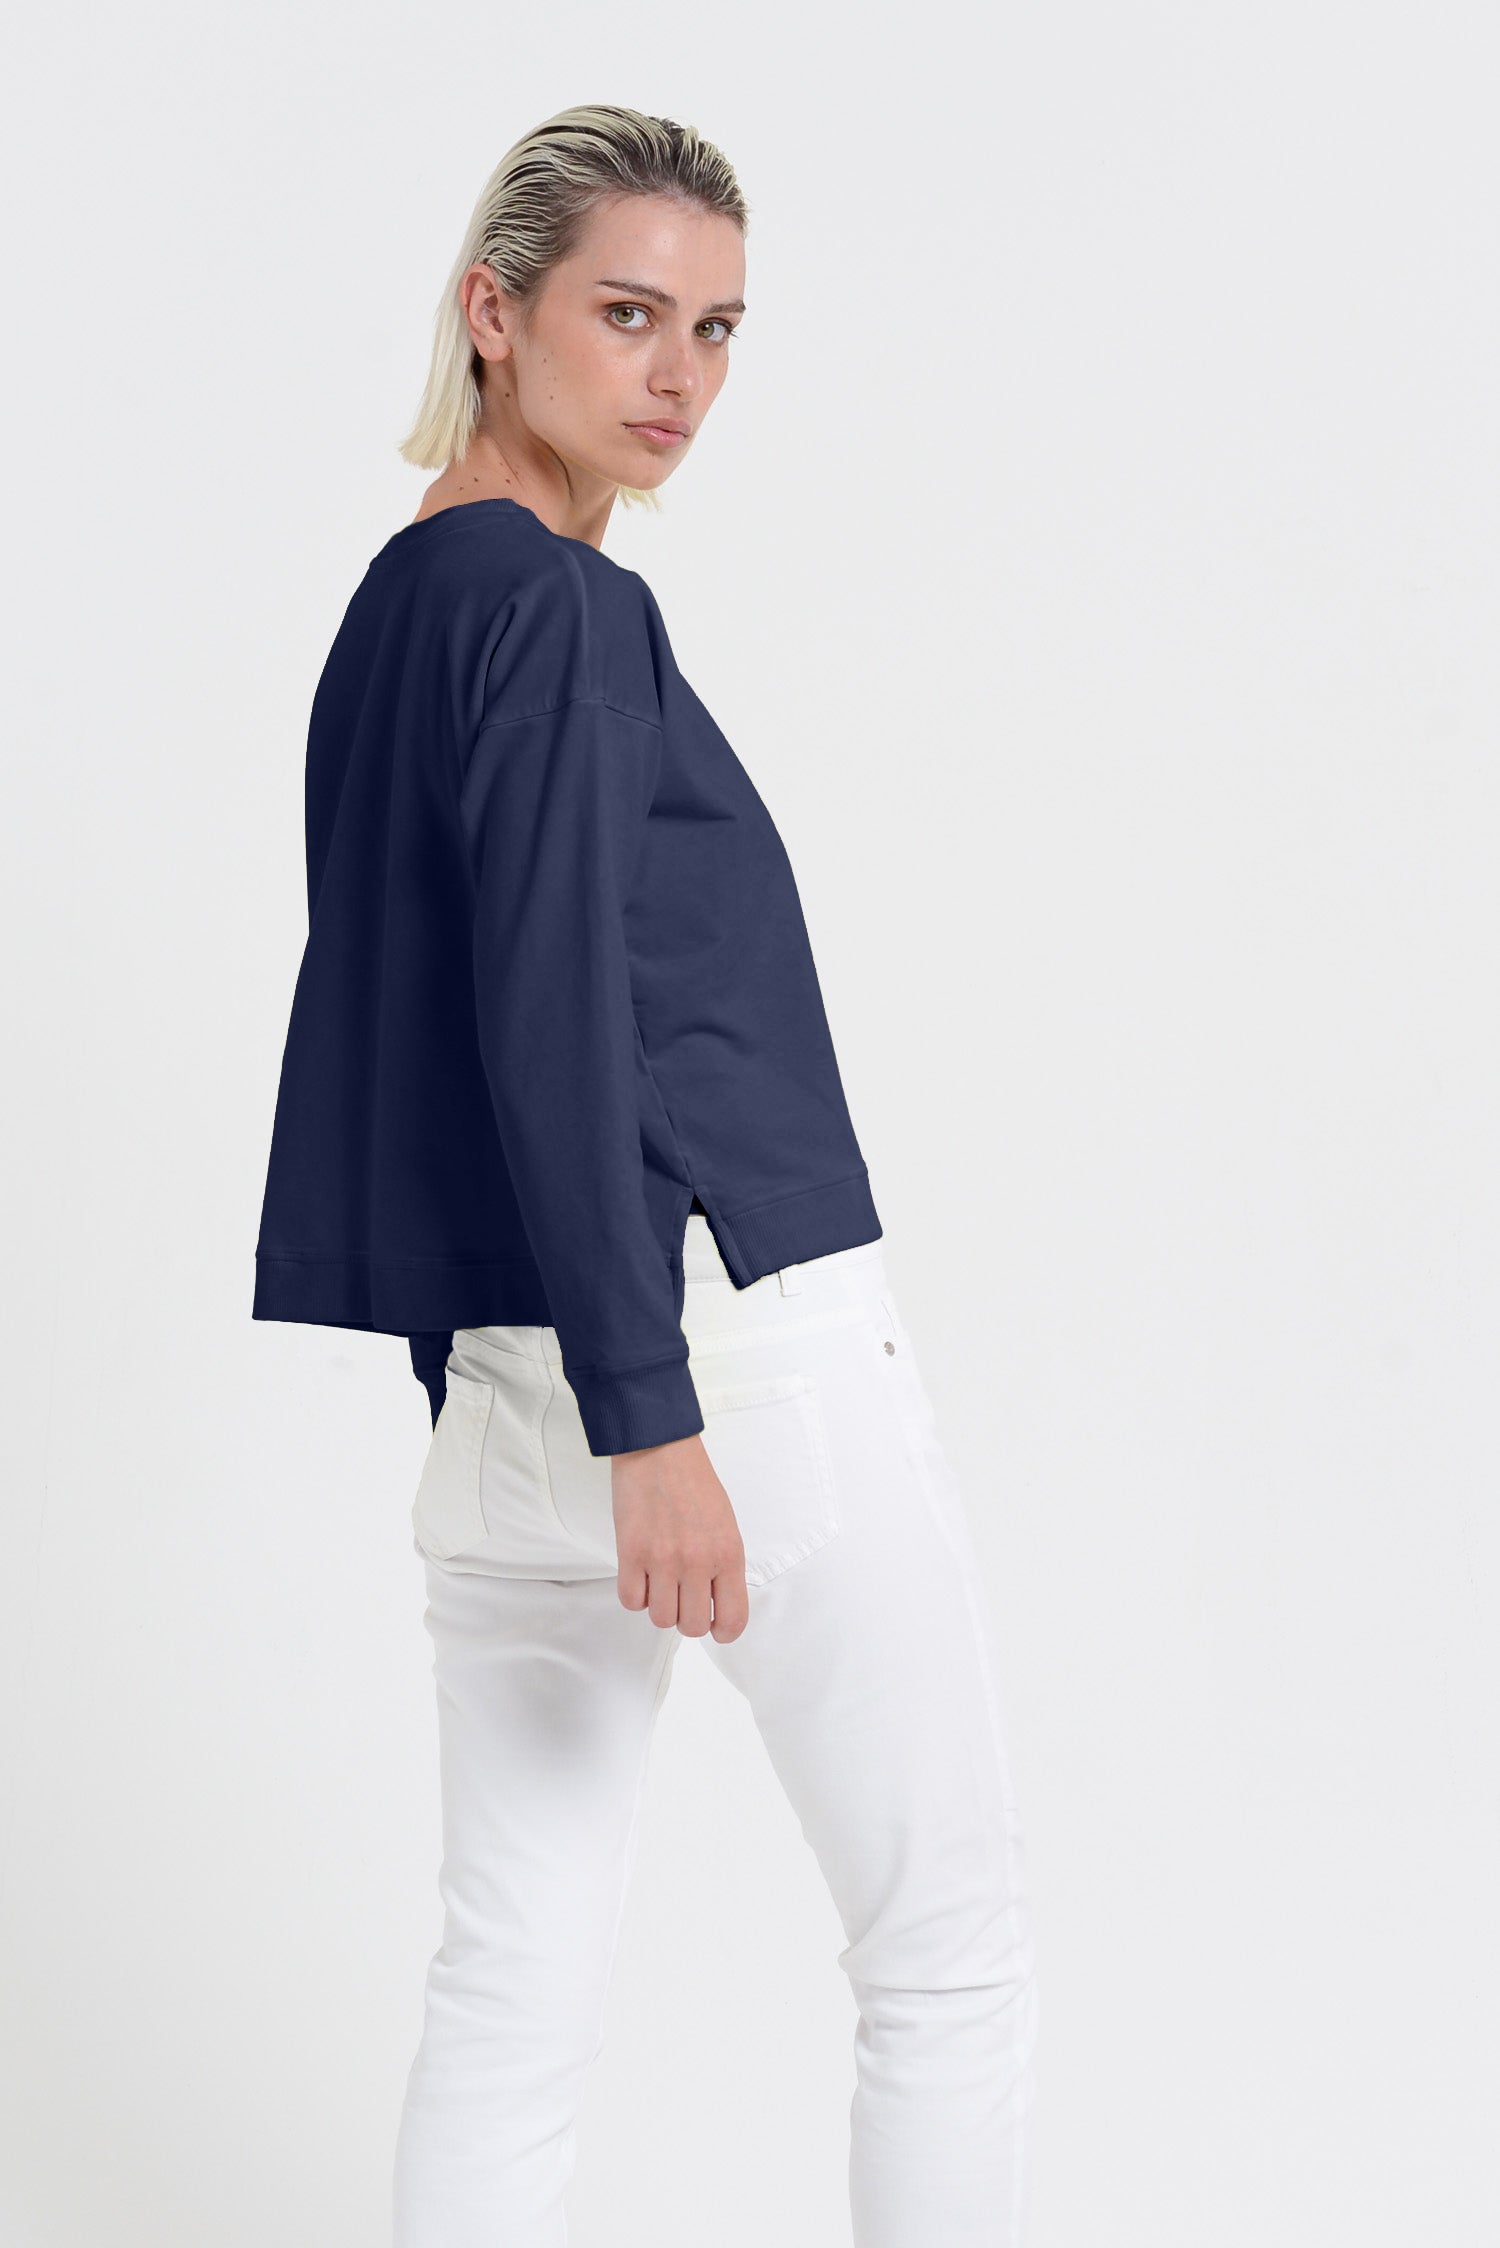 Roxie Sweatshirt - Women's Cropped Cotton Sweatshirt - Navy